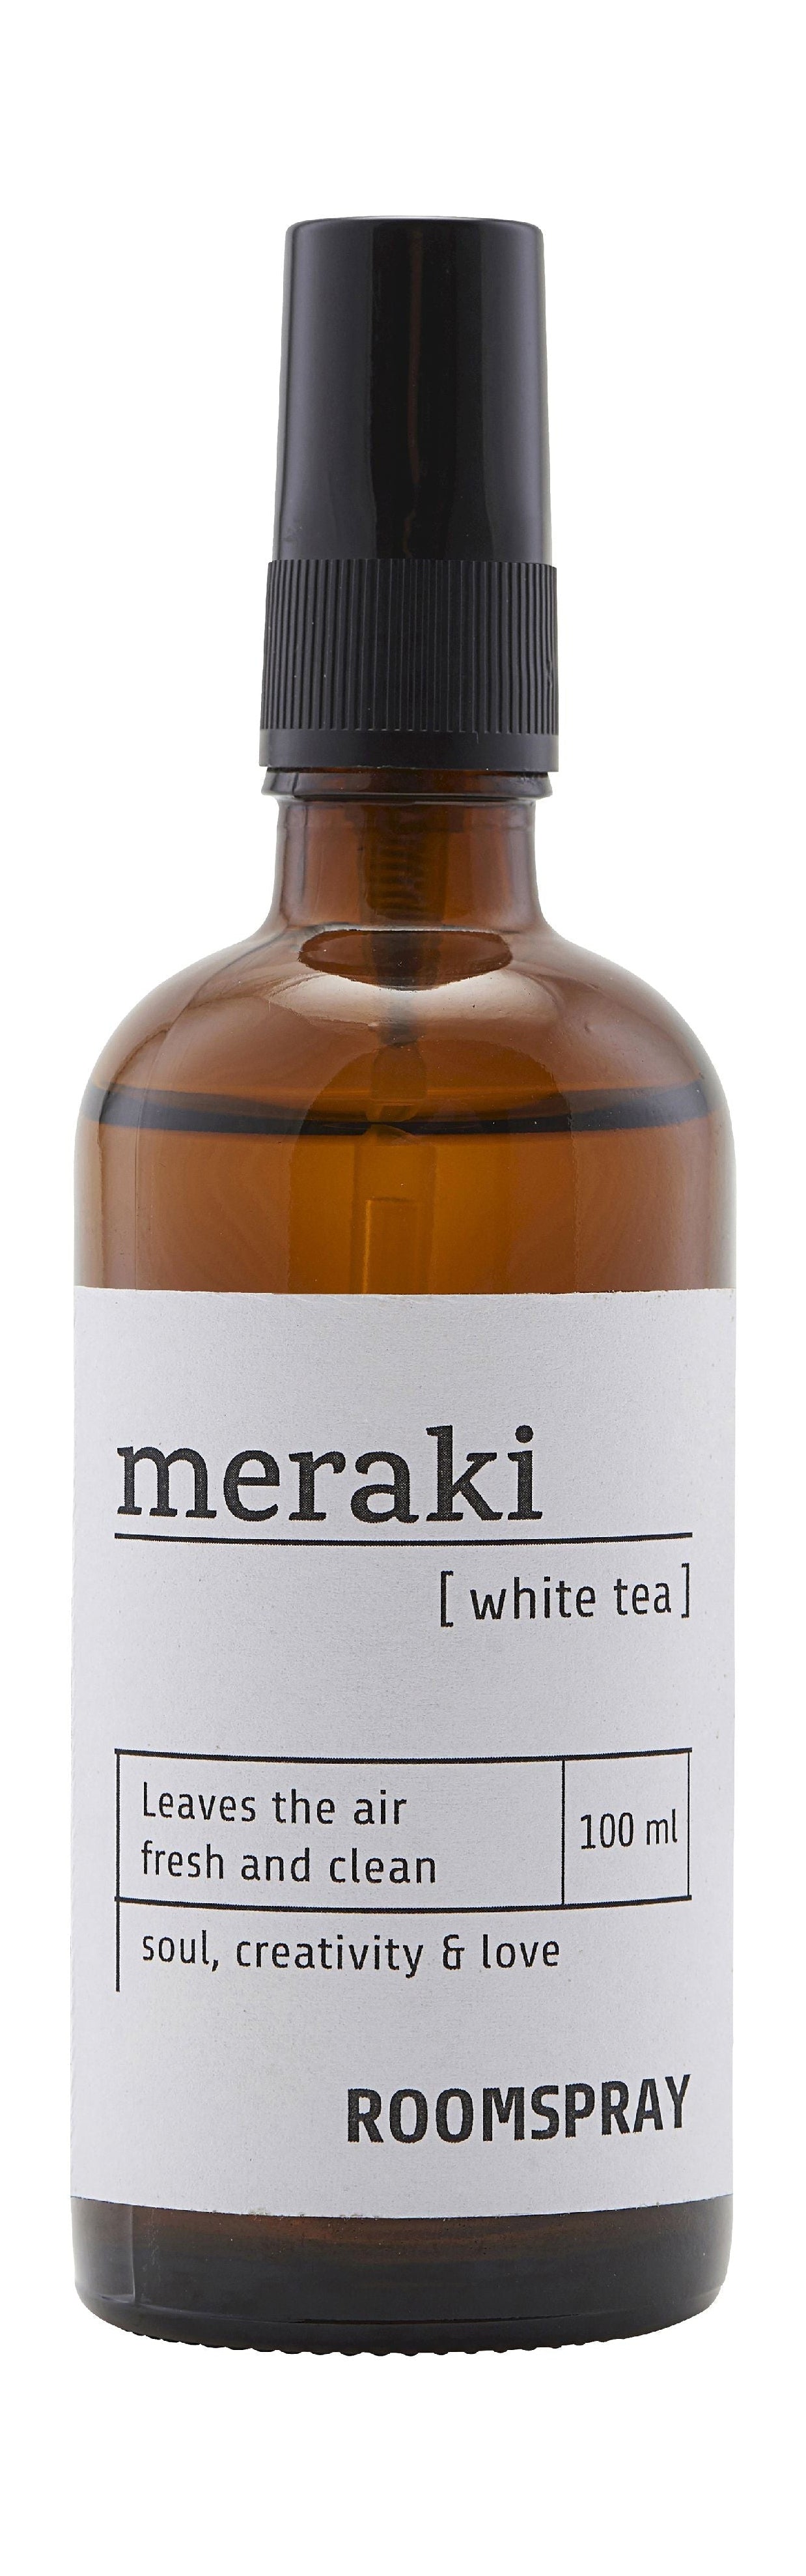 Spray per camere Meraki 100 ml, tè bianco